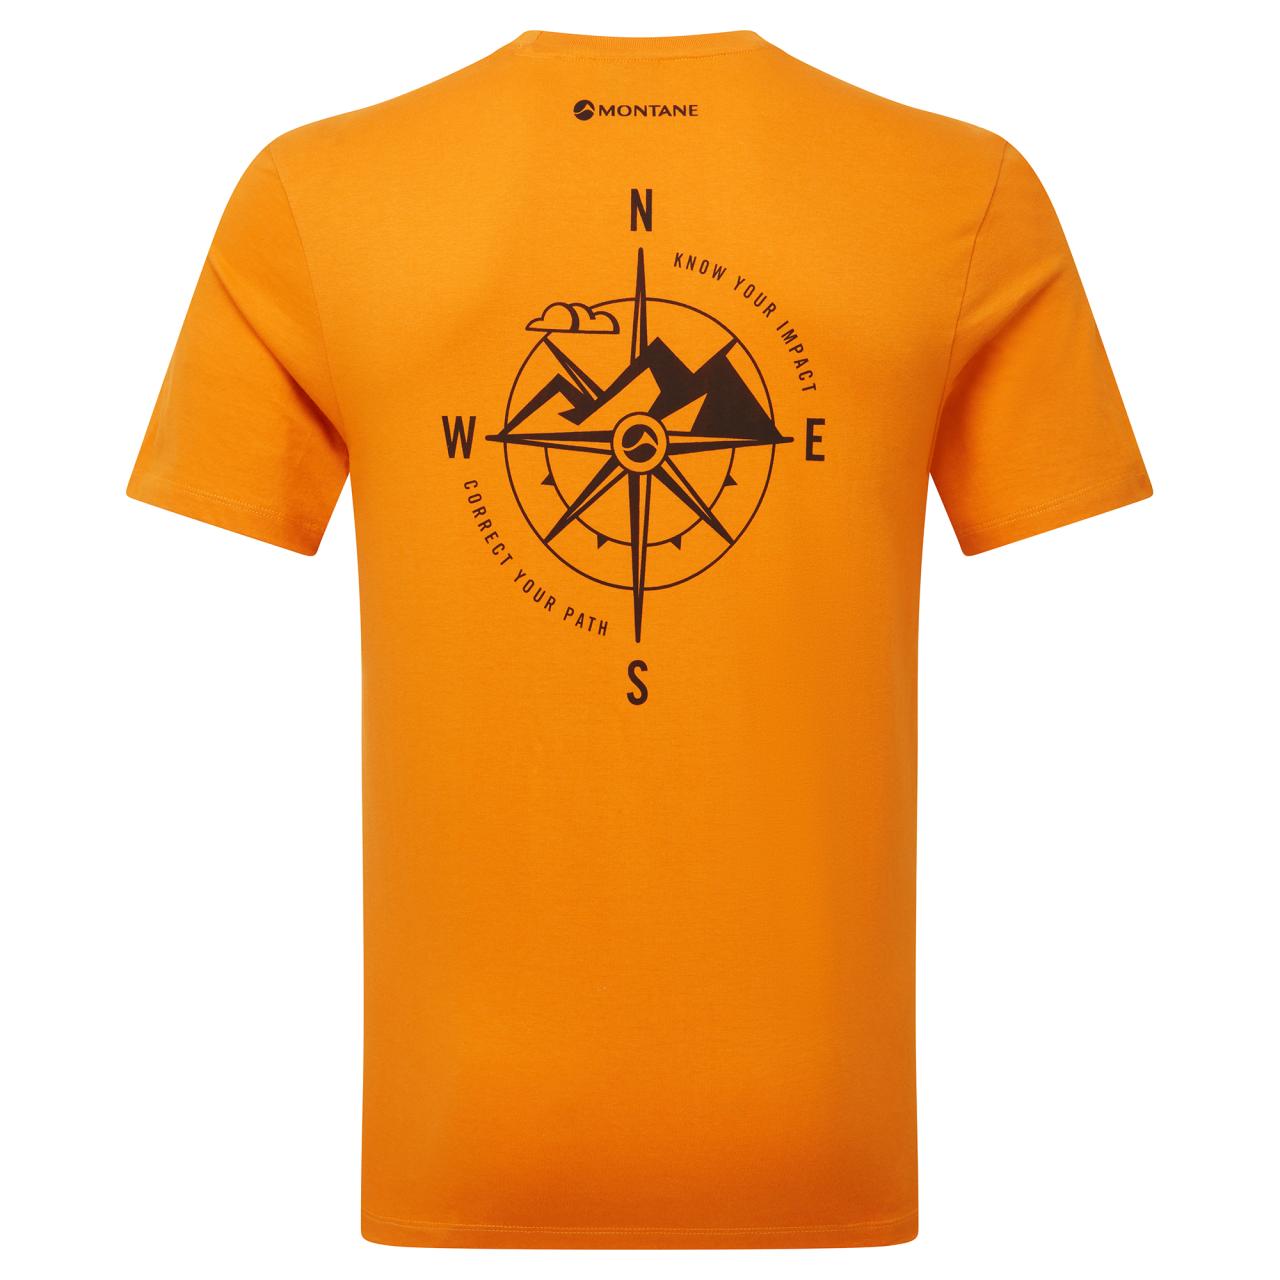 IMPACT COMPASS TEE-FLAME ORANGE-XL pánské tričko žlutooranžové